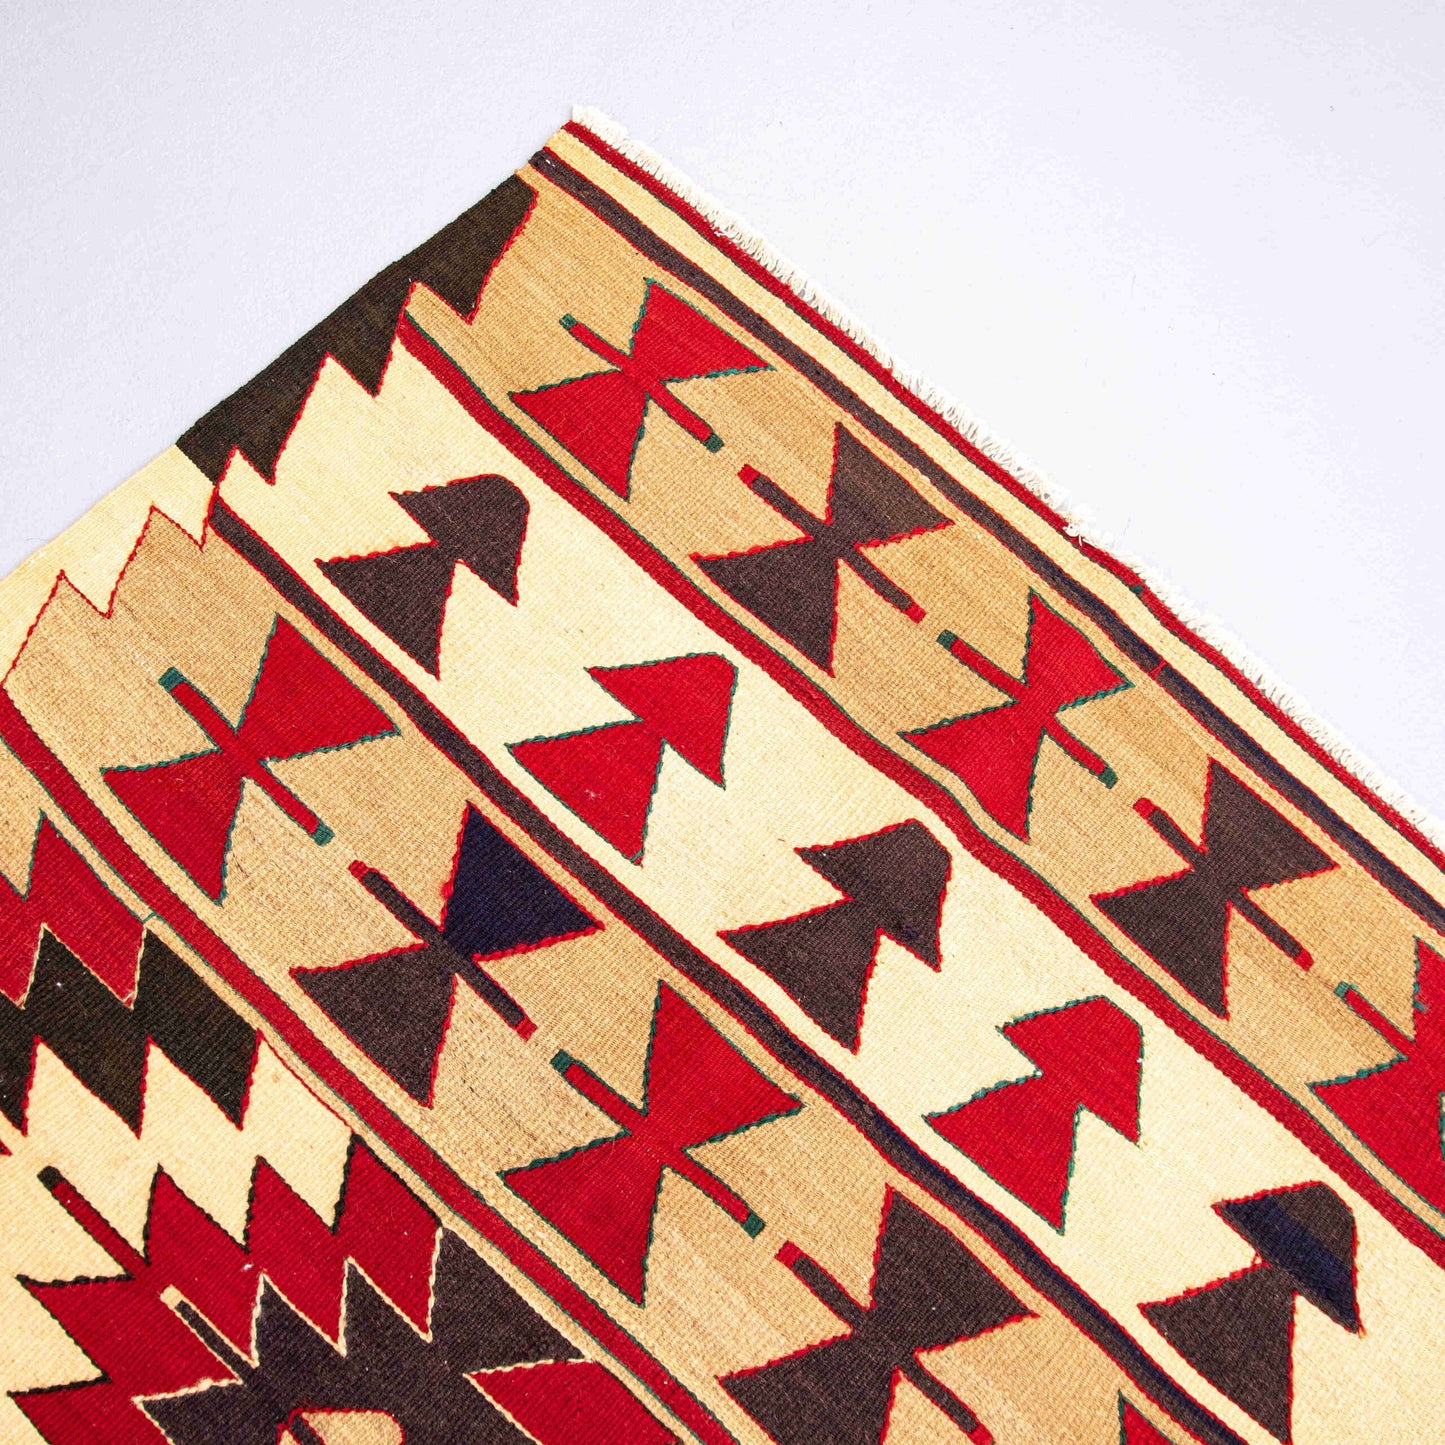 Oriental Kilim Anatolian Handmade Wool On Wool 102 X 142 Cm - 3' 5'' X 4' 8'' Red C014 ER01